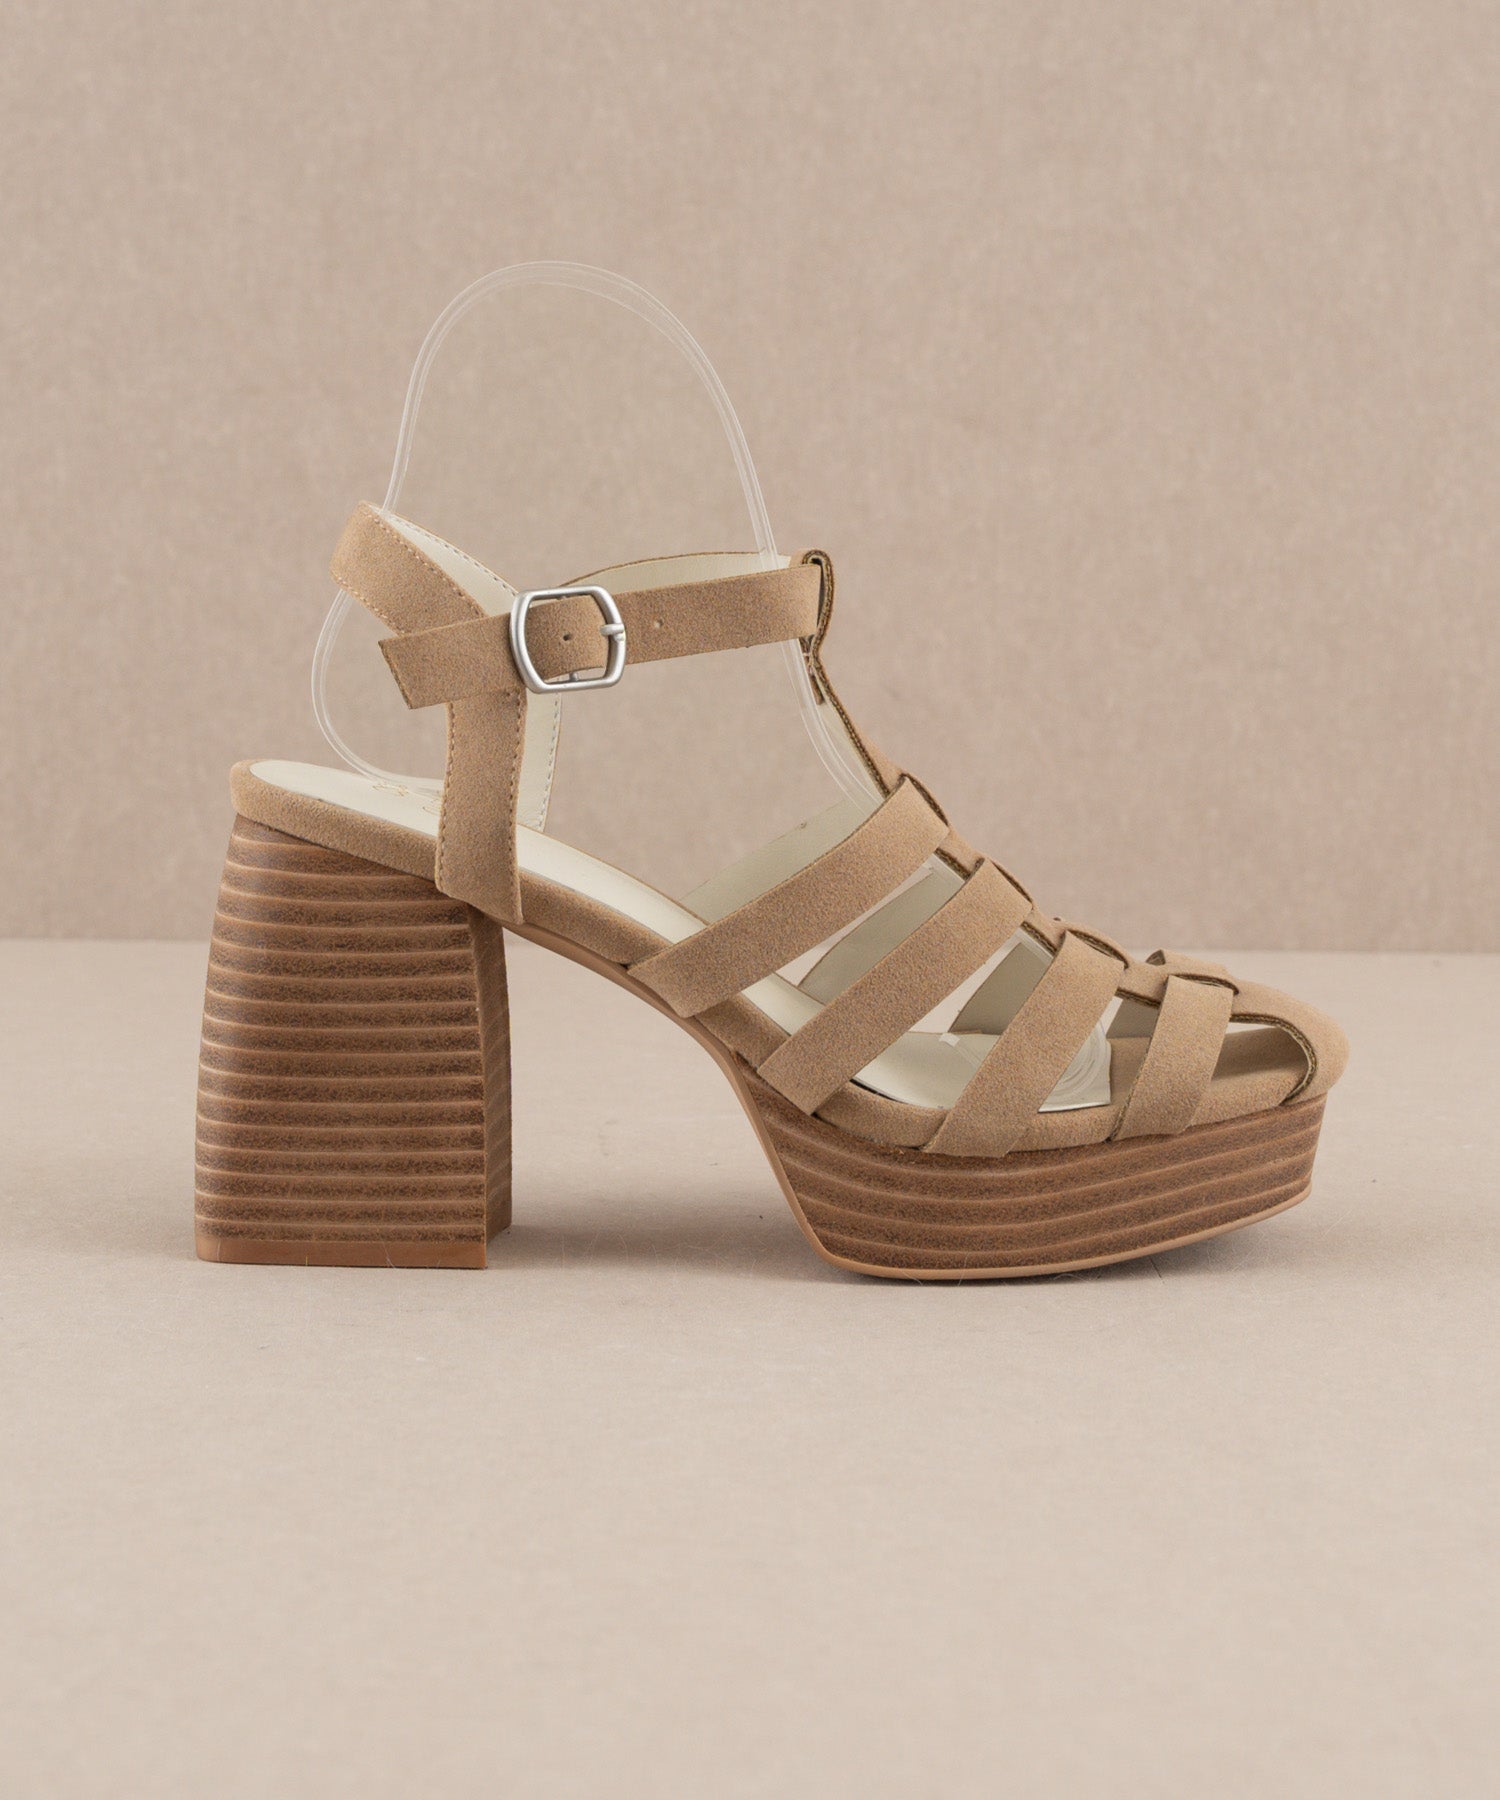 Elegant Summer Brands HELOISE Sandals Shoes Women Platform Heels Lady  Gladiator Sandalias Party Wedding Bridal EU35 43 Box From Movement125,  $60.65 | DHgate.Com